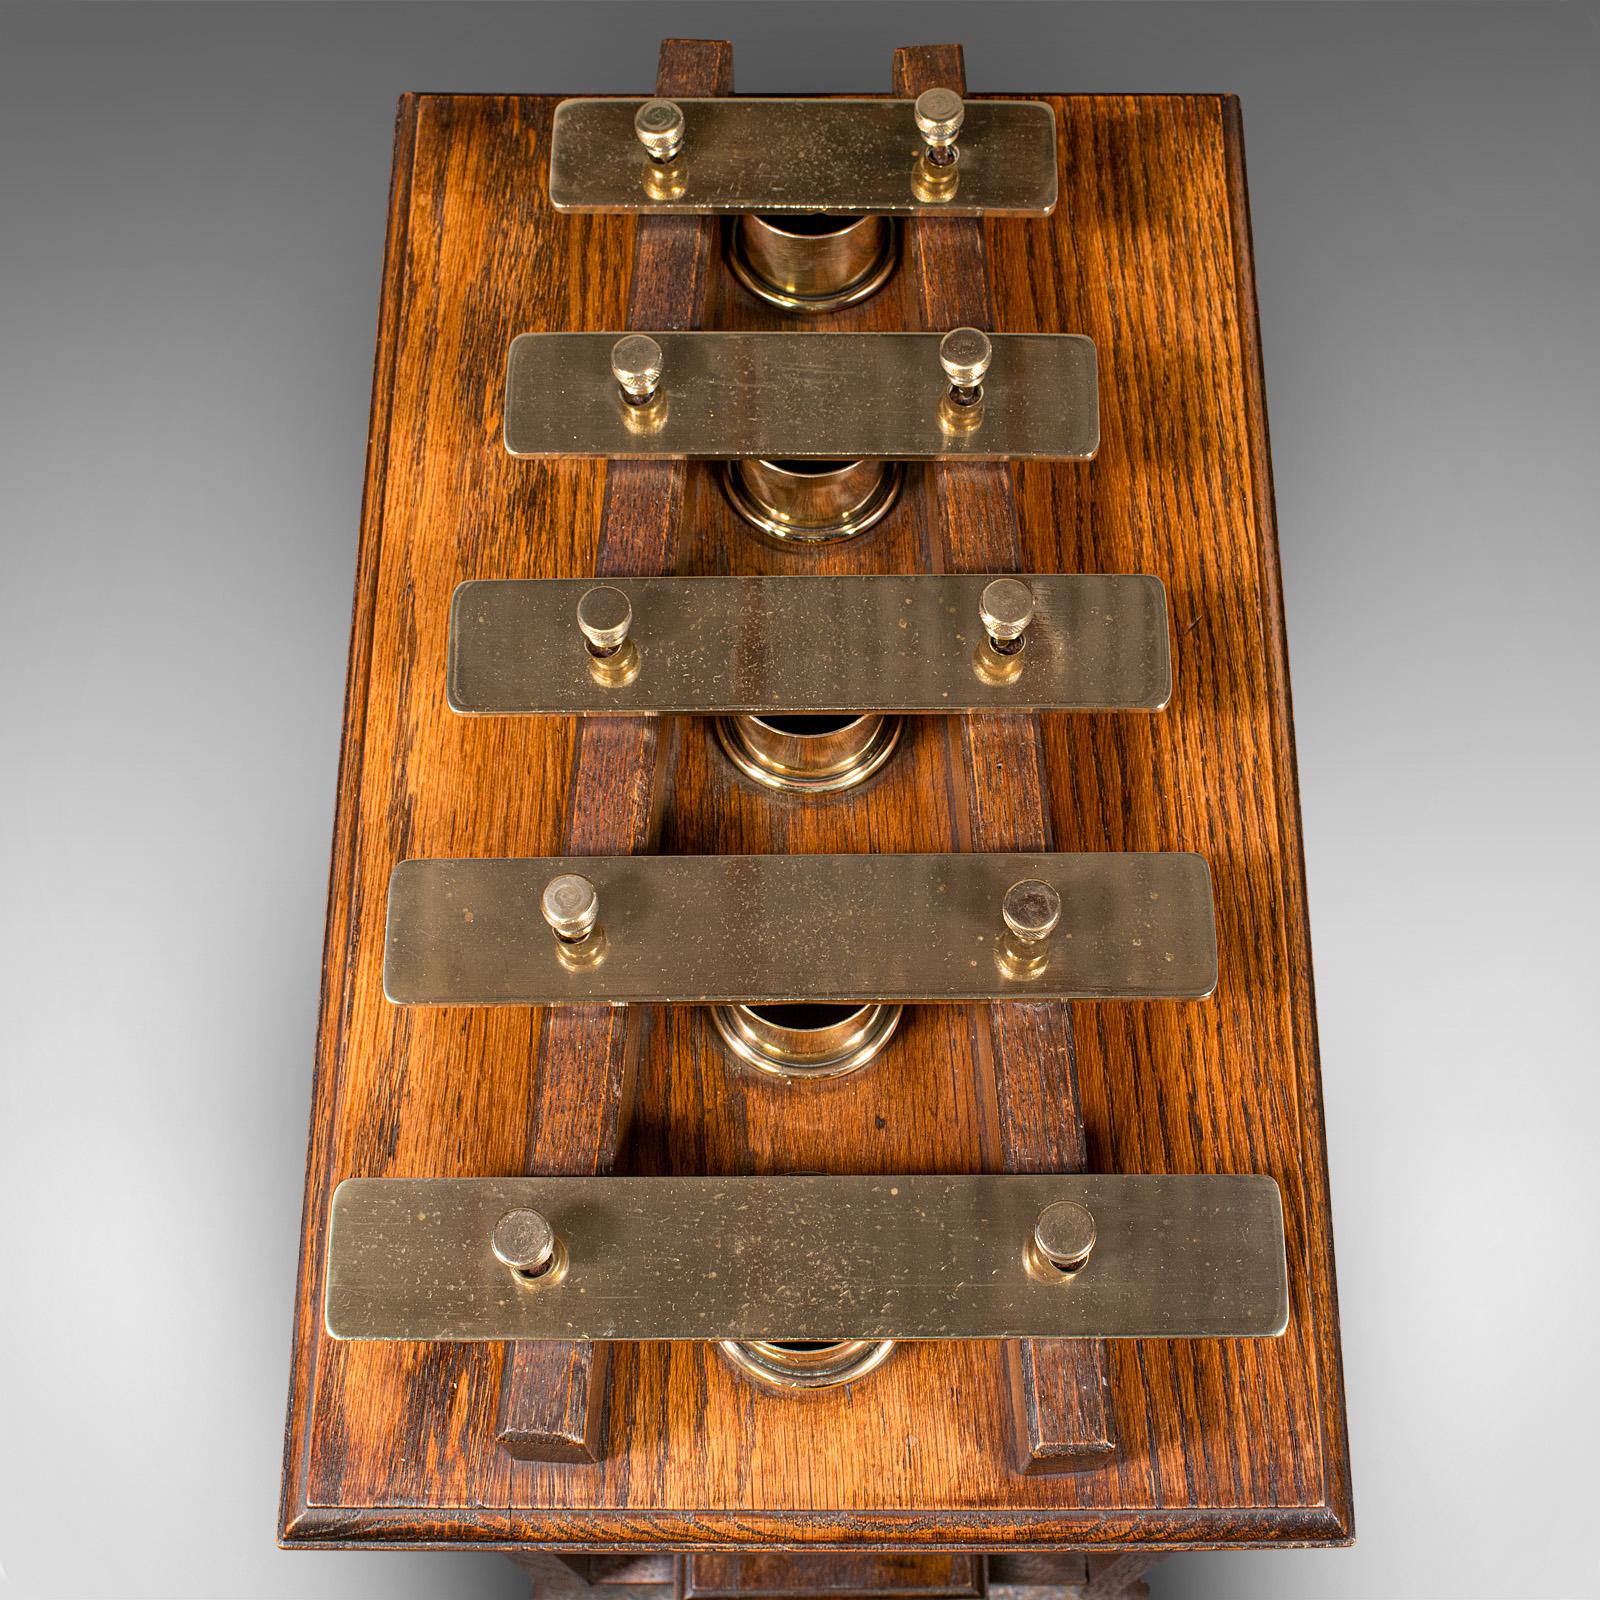 Antique Marimbaphone, Brass, Oak, Glockenspiel, Musical Instrument, Edwardian 1